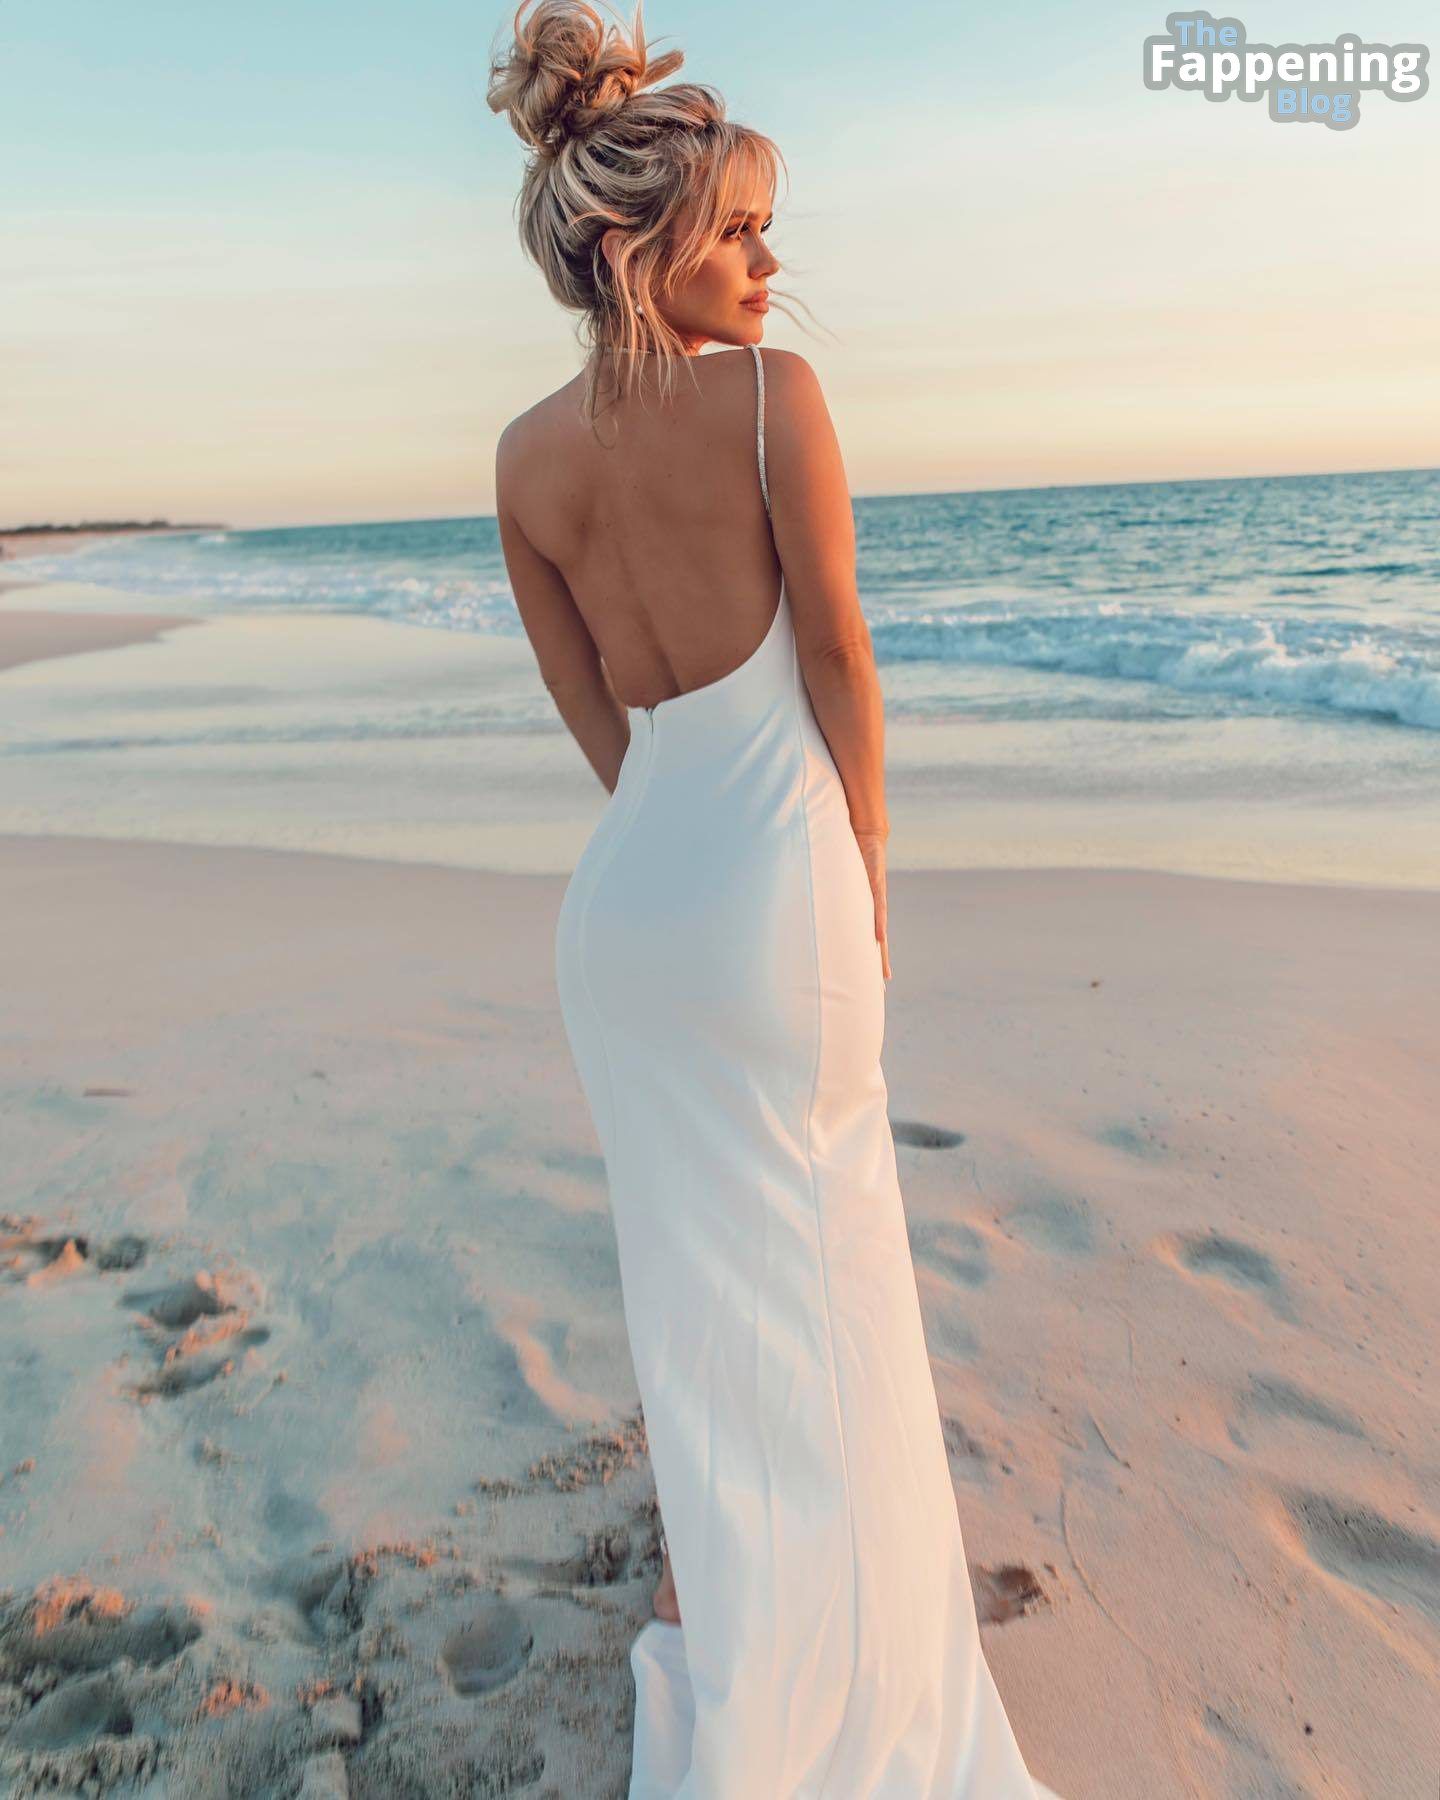 hilde-osland-sexy-beach-photo-braless-white-dress-10-thefappeningblog.com_.jpg